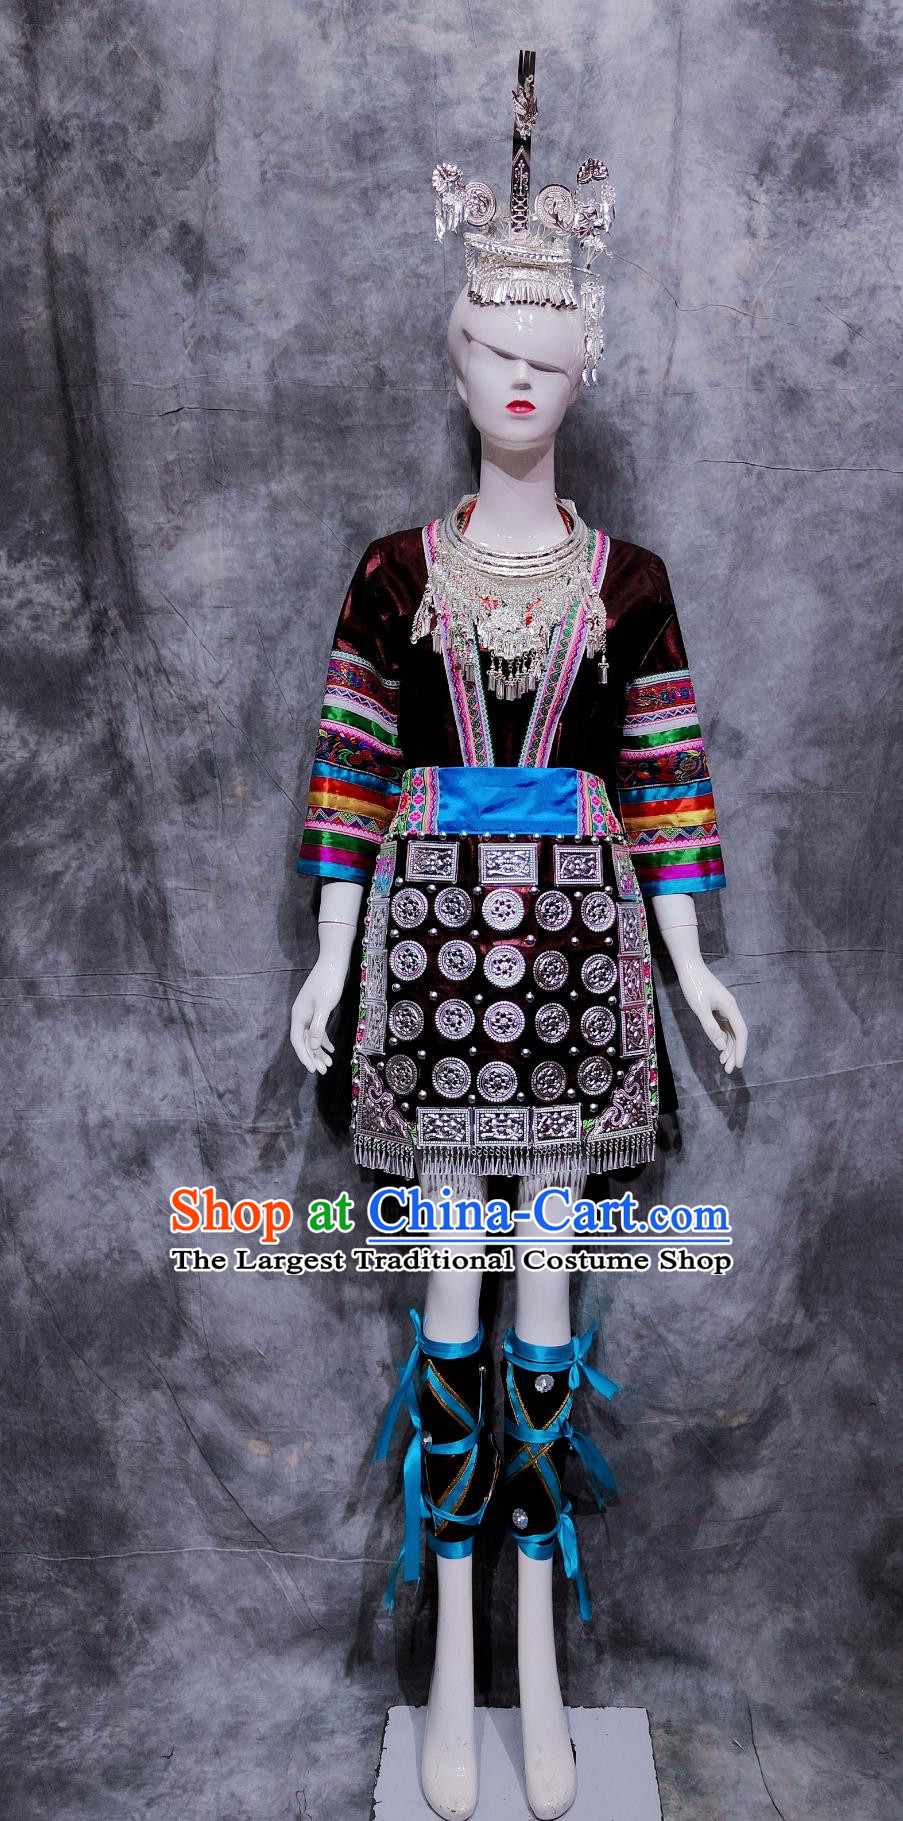 Traditional Guizhou Travel Dress Chinese Ethnic Dance Costume China Dong National Minority Woman Clothing